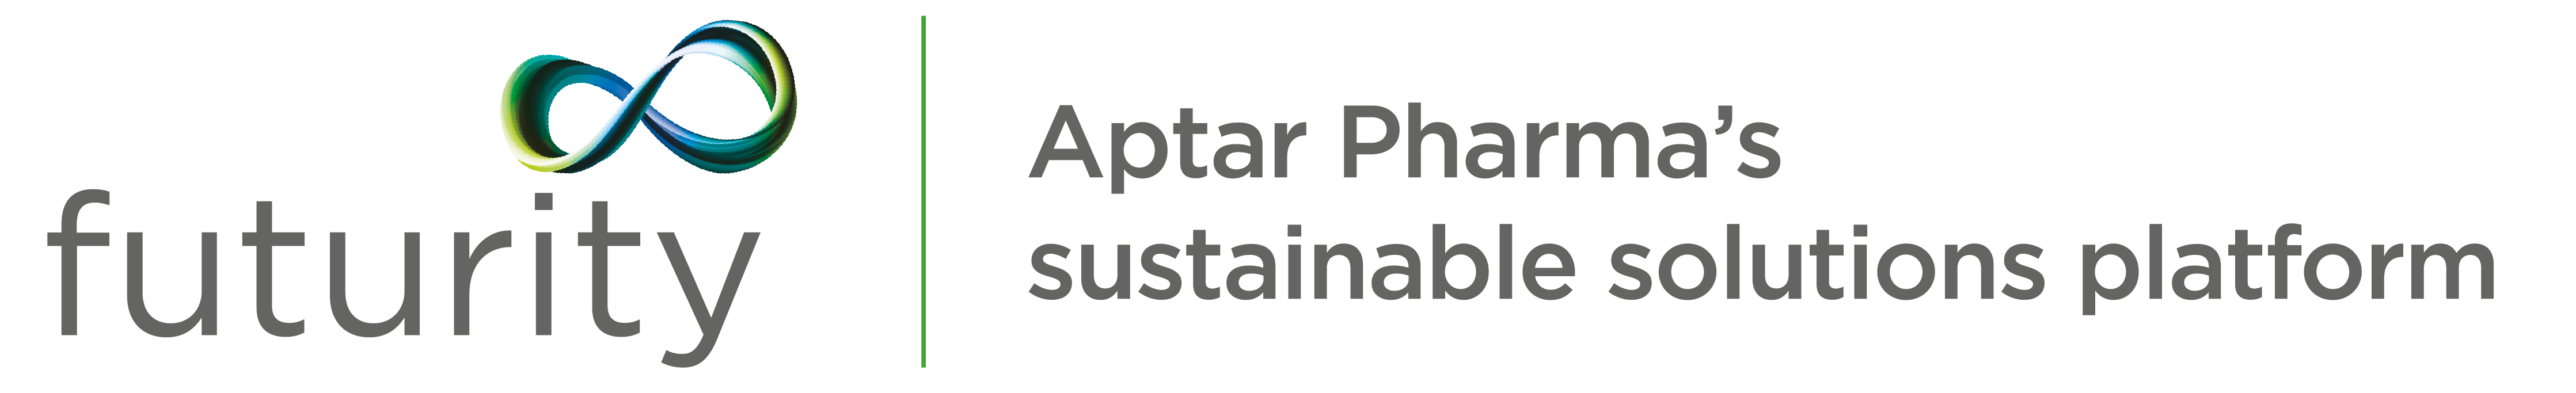 Aptar Pharma futurity sustainable solutions platform logo